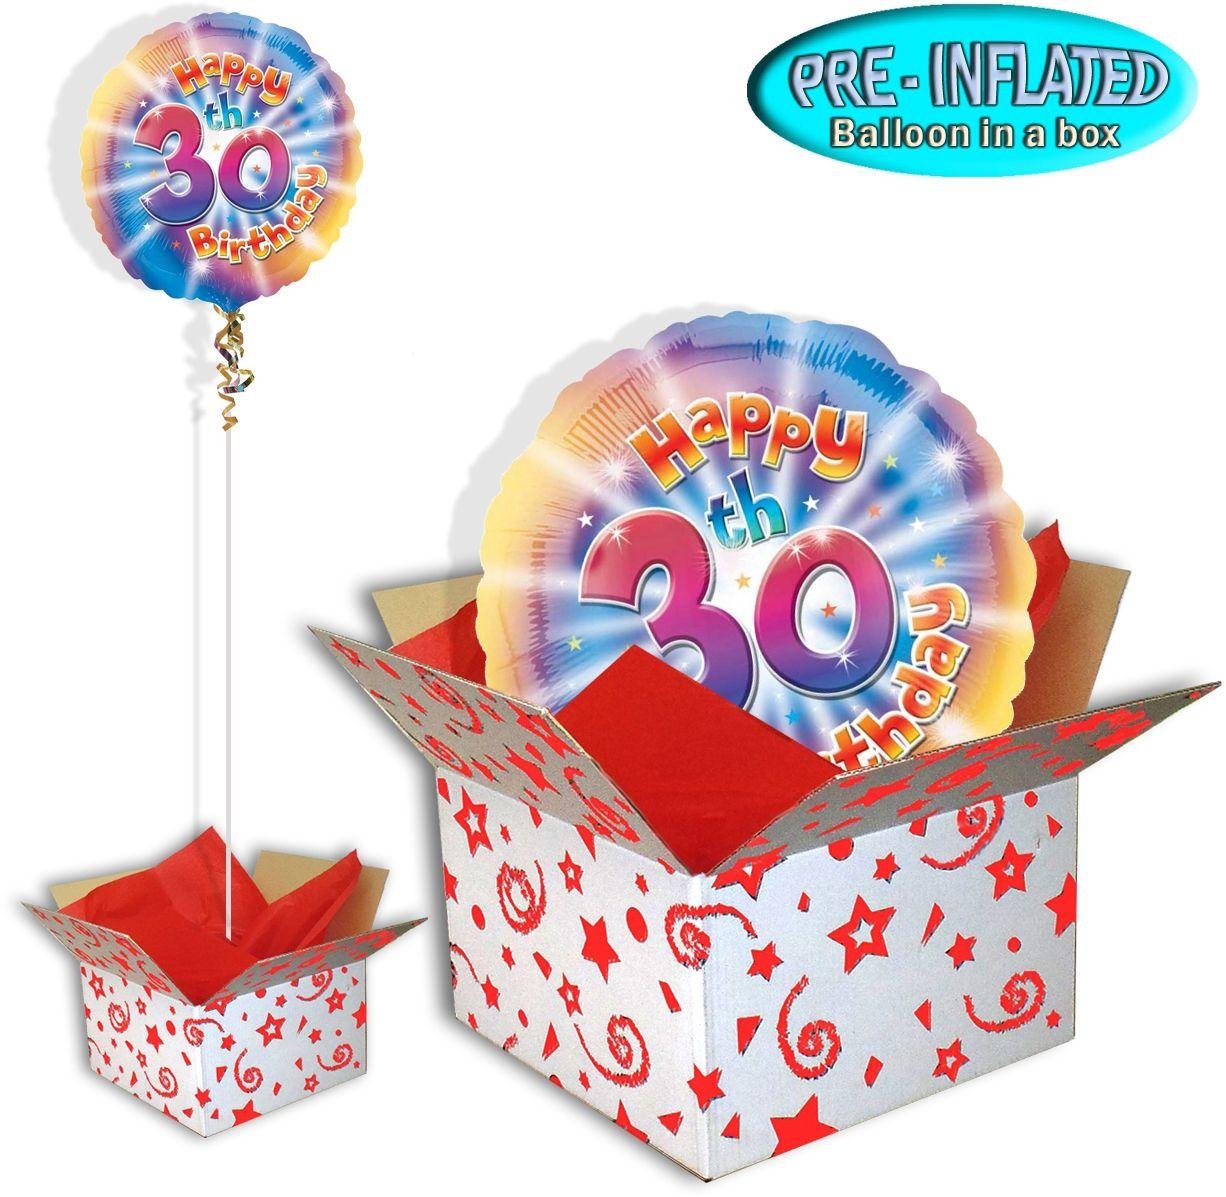 Happy 30th Birthday Balloon in a Box.